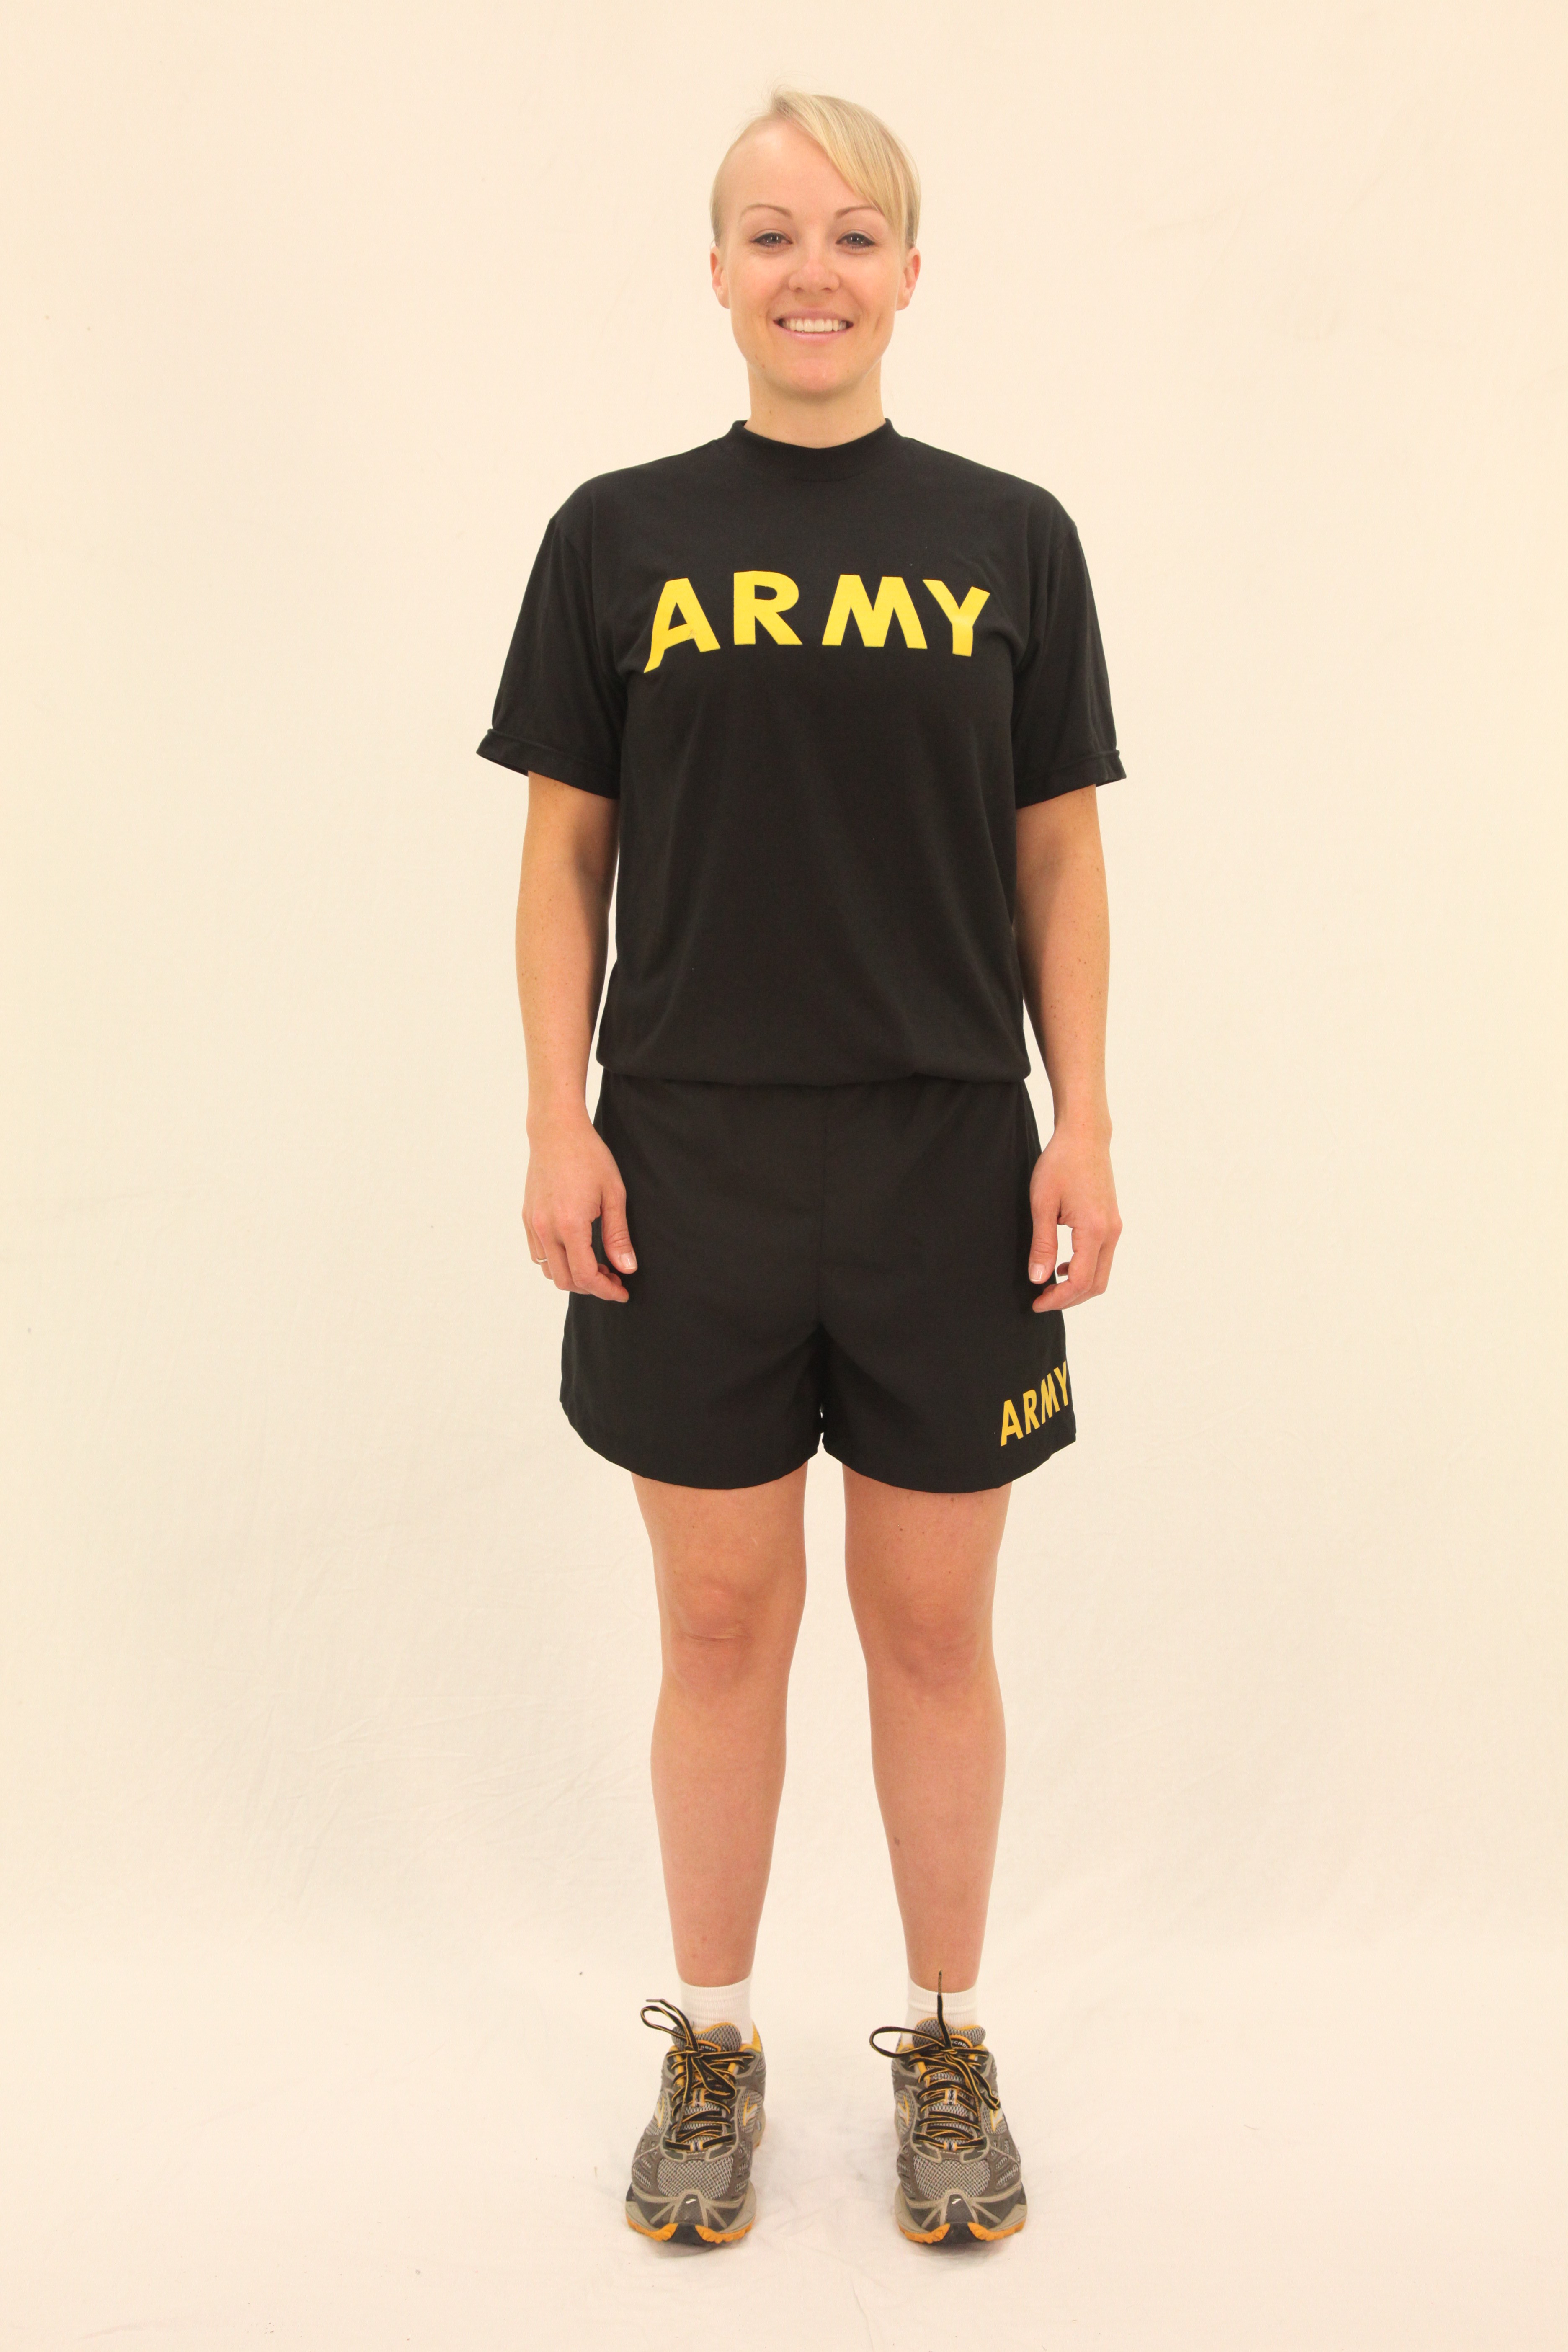 New Army Pt Uniform 11